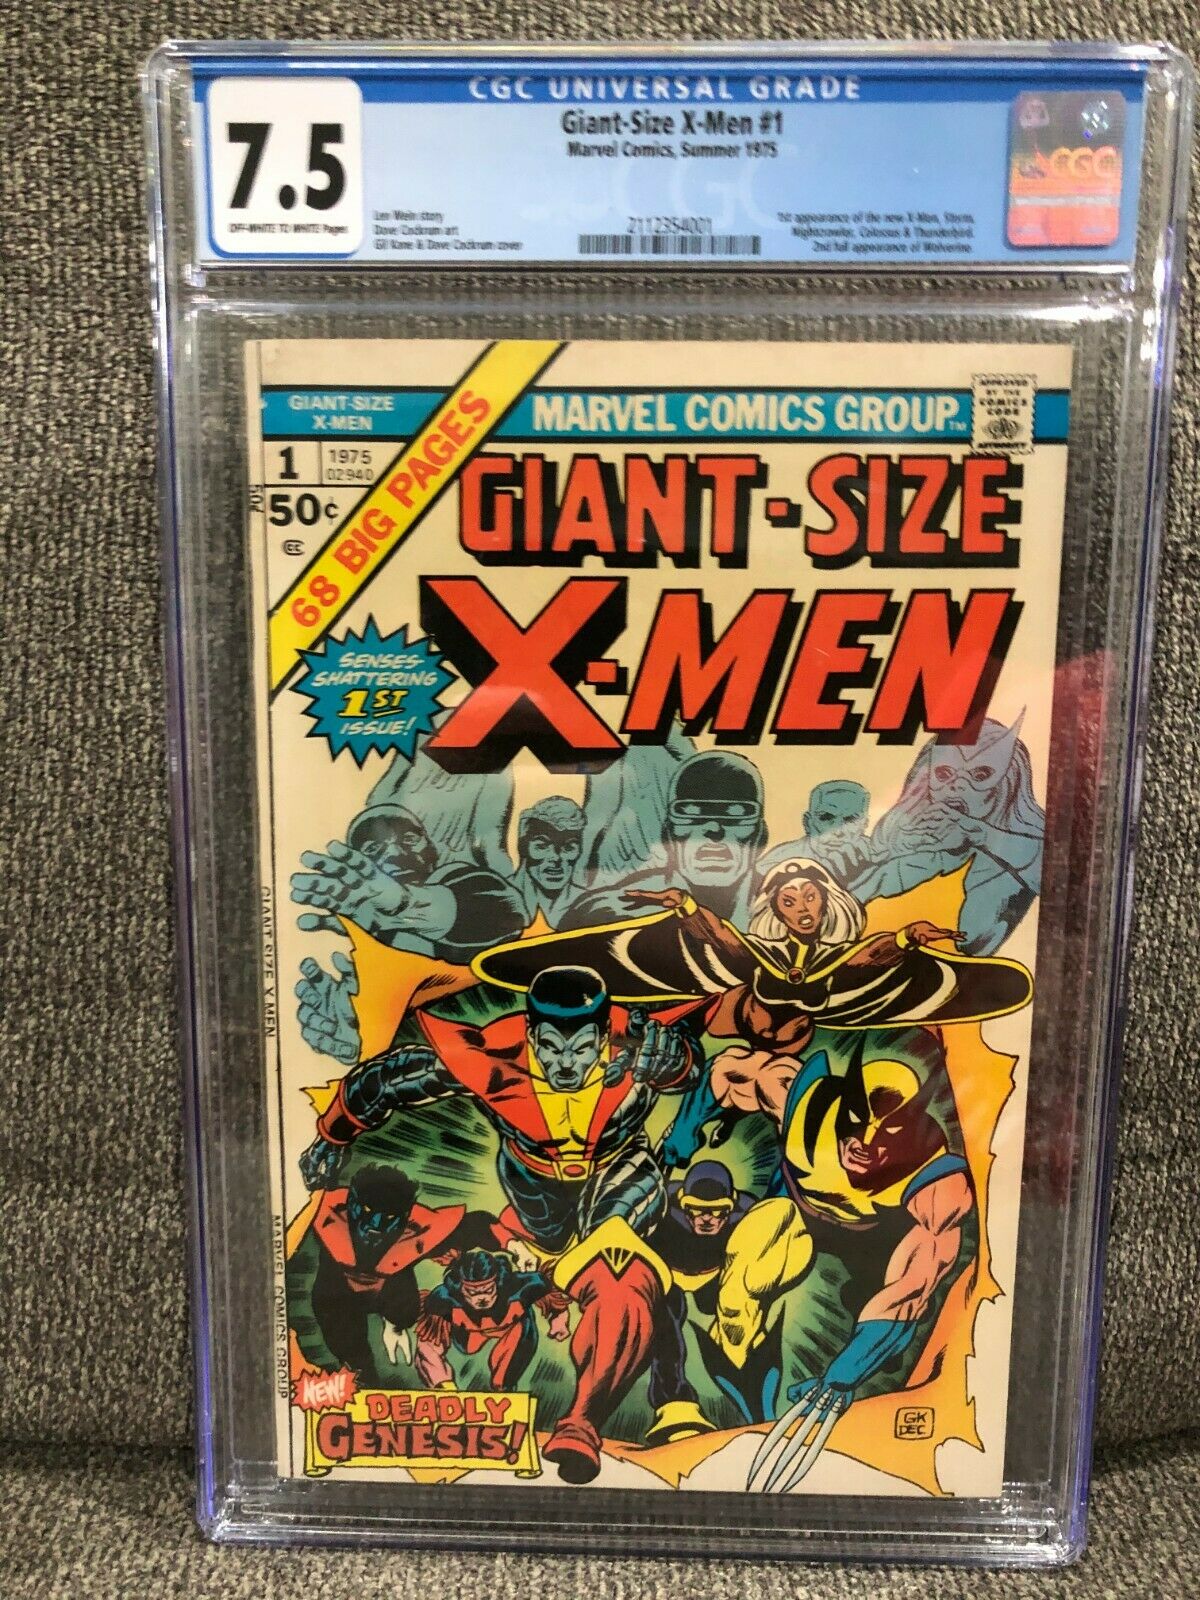 GiantSize Xmen 1 CGC 75 owWHITE pages Wolverine Storm Colossus Nightcrawler